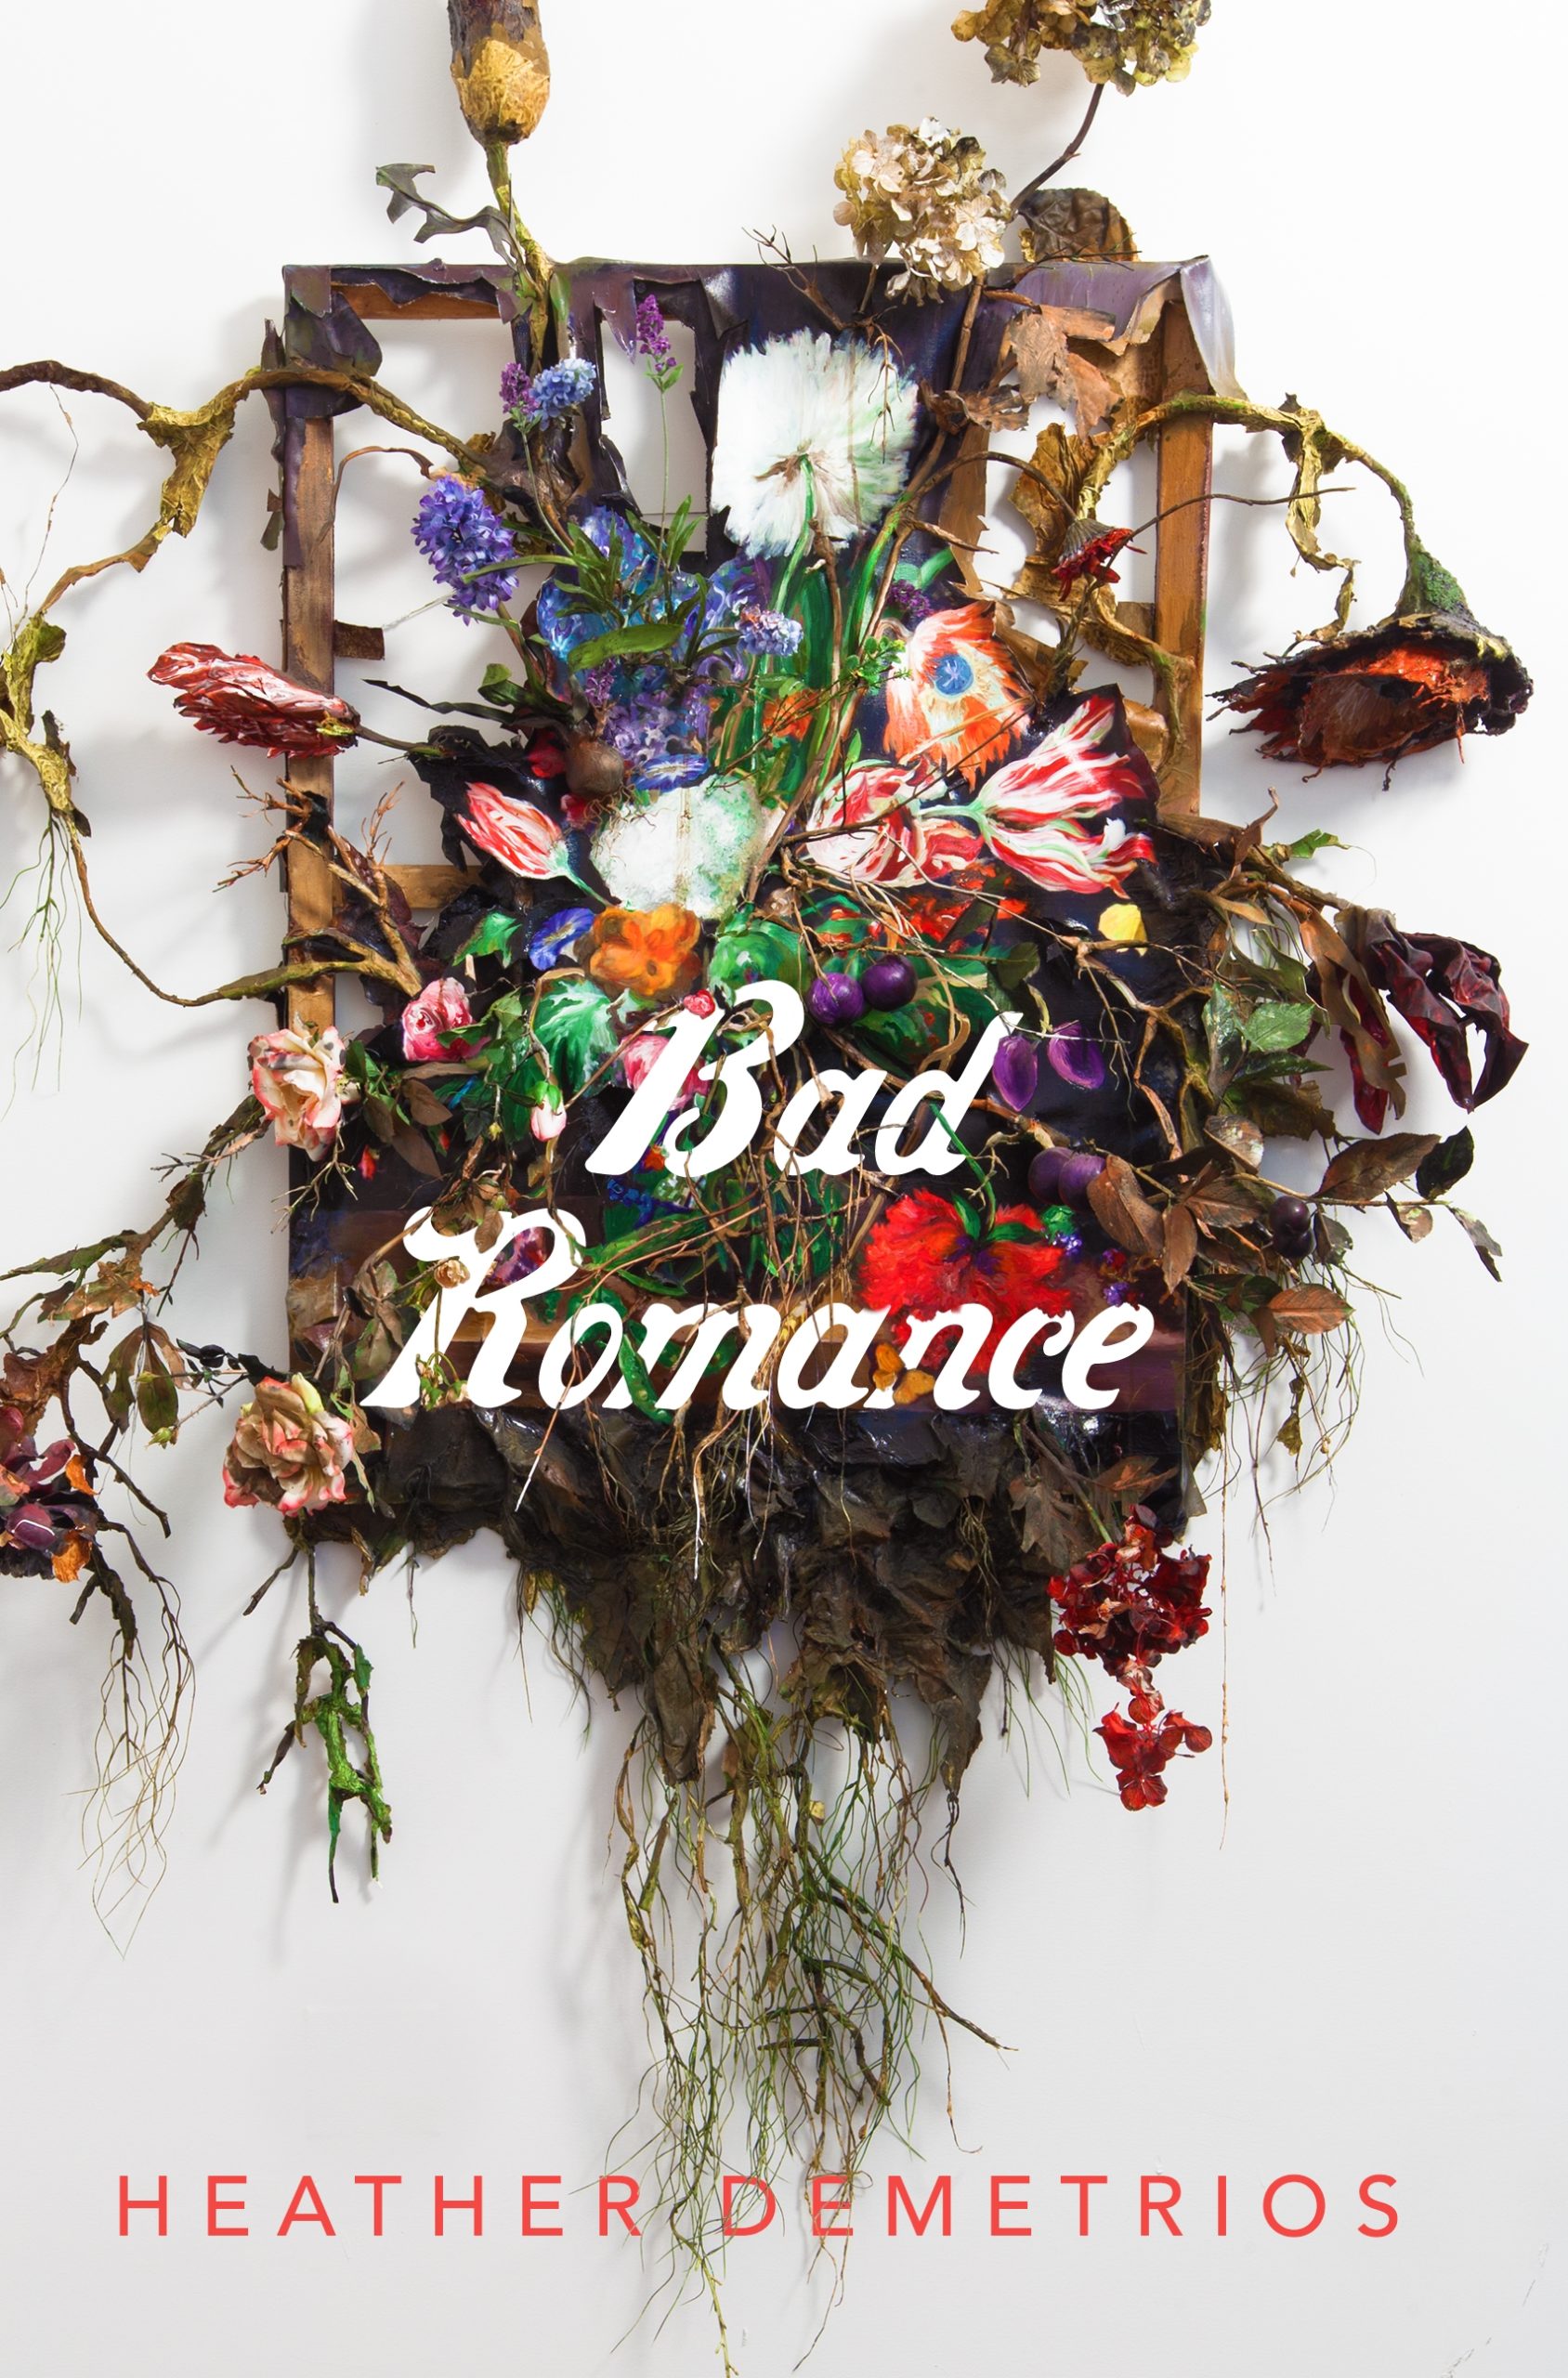 Book Bad Romance